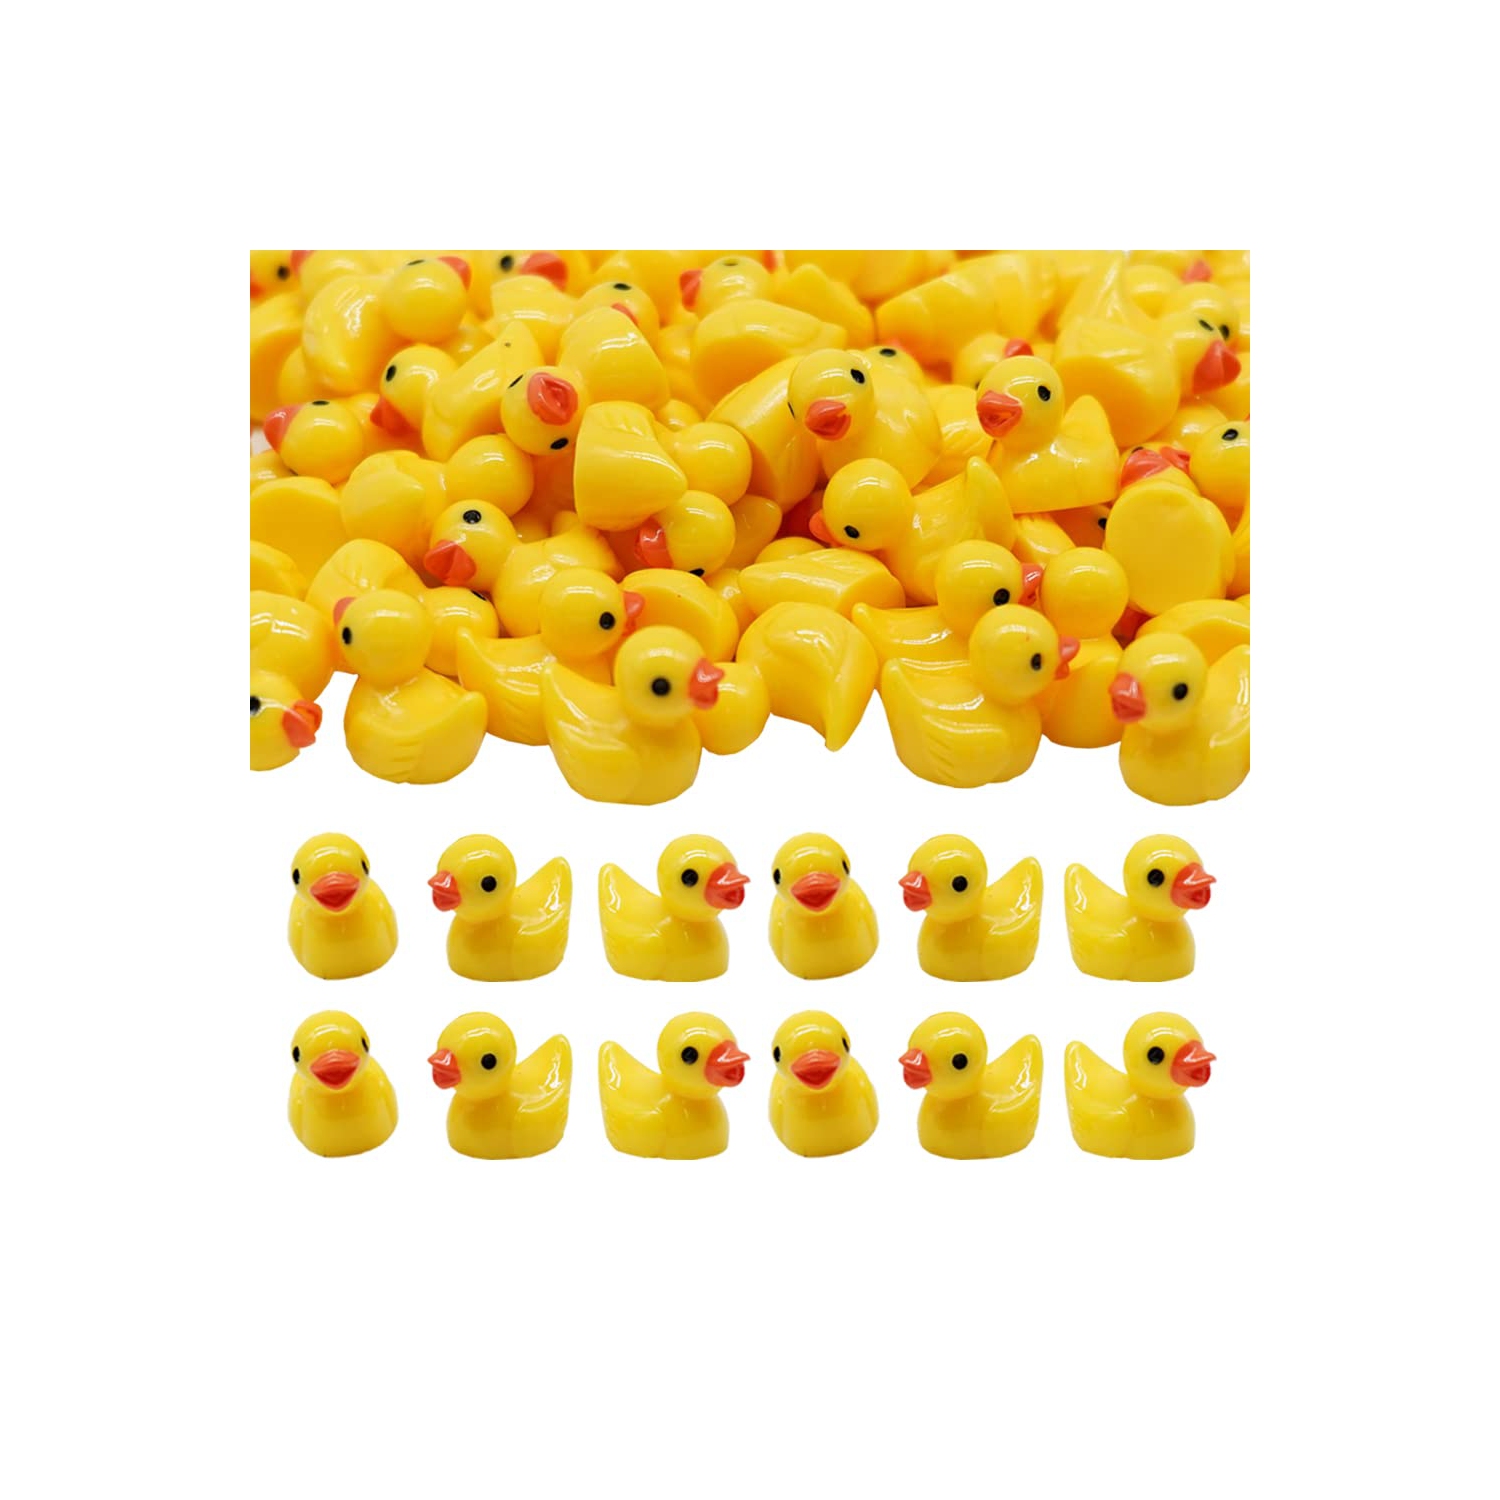 220 Mini Resin Ducks - Tiny Duck Figures for Slime Charms, DIY Craft, Micro Landscape, Garden Aquarium, Dollhouse Decoration - Birthday Party Yellow